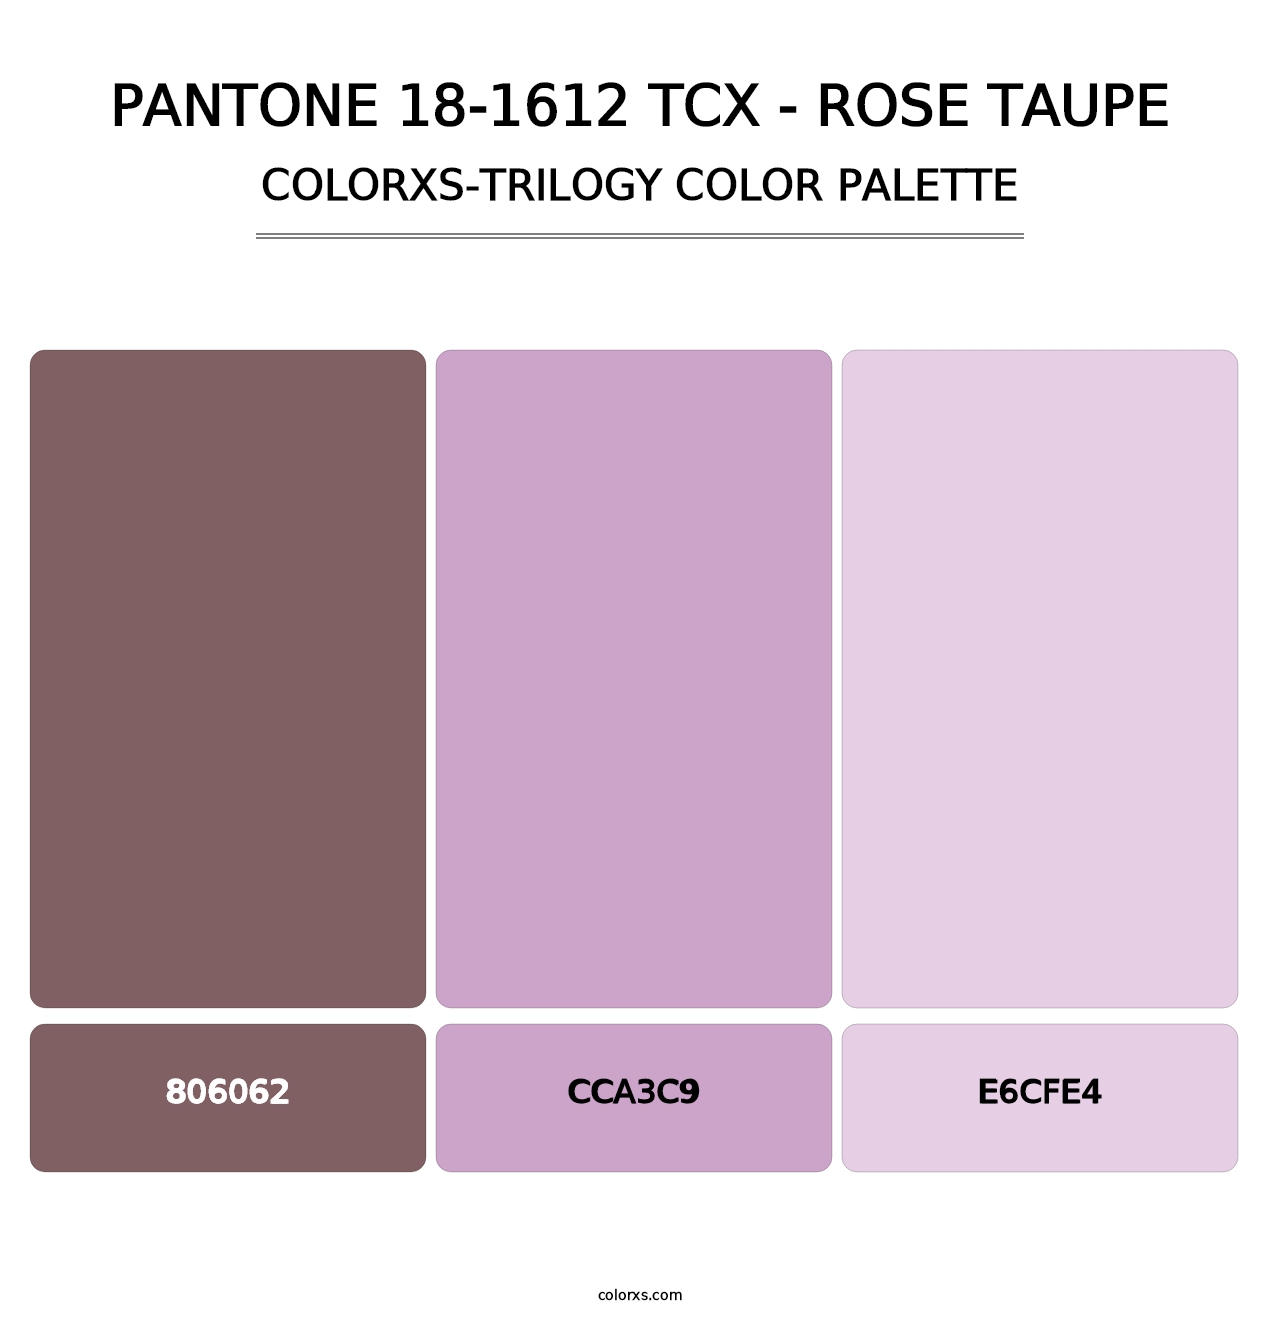 PANTONE 18-1612 TCX - Rose Taupe - Colorxs Trilogy Palette